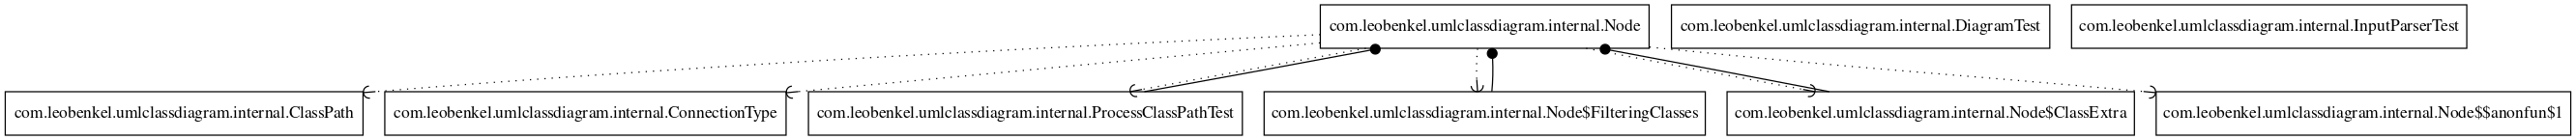 umlclassdiagram example